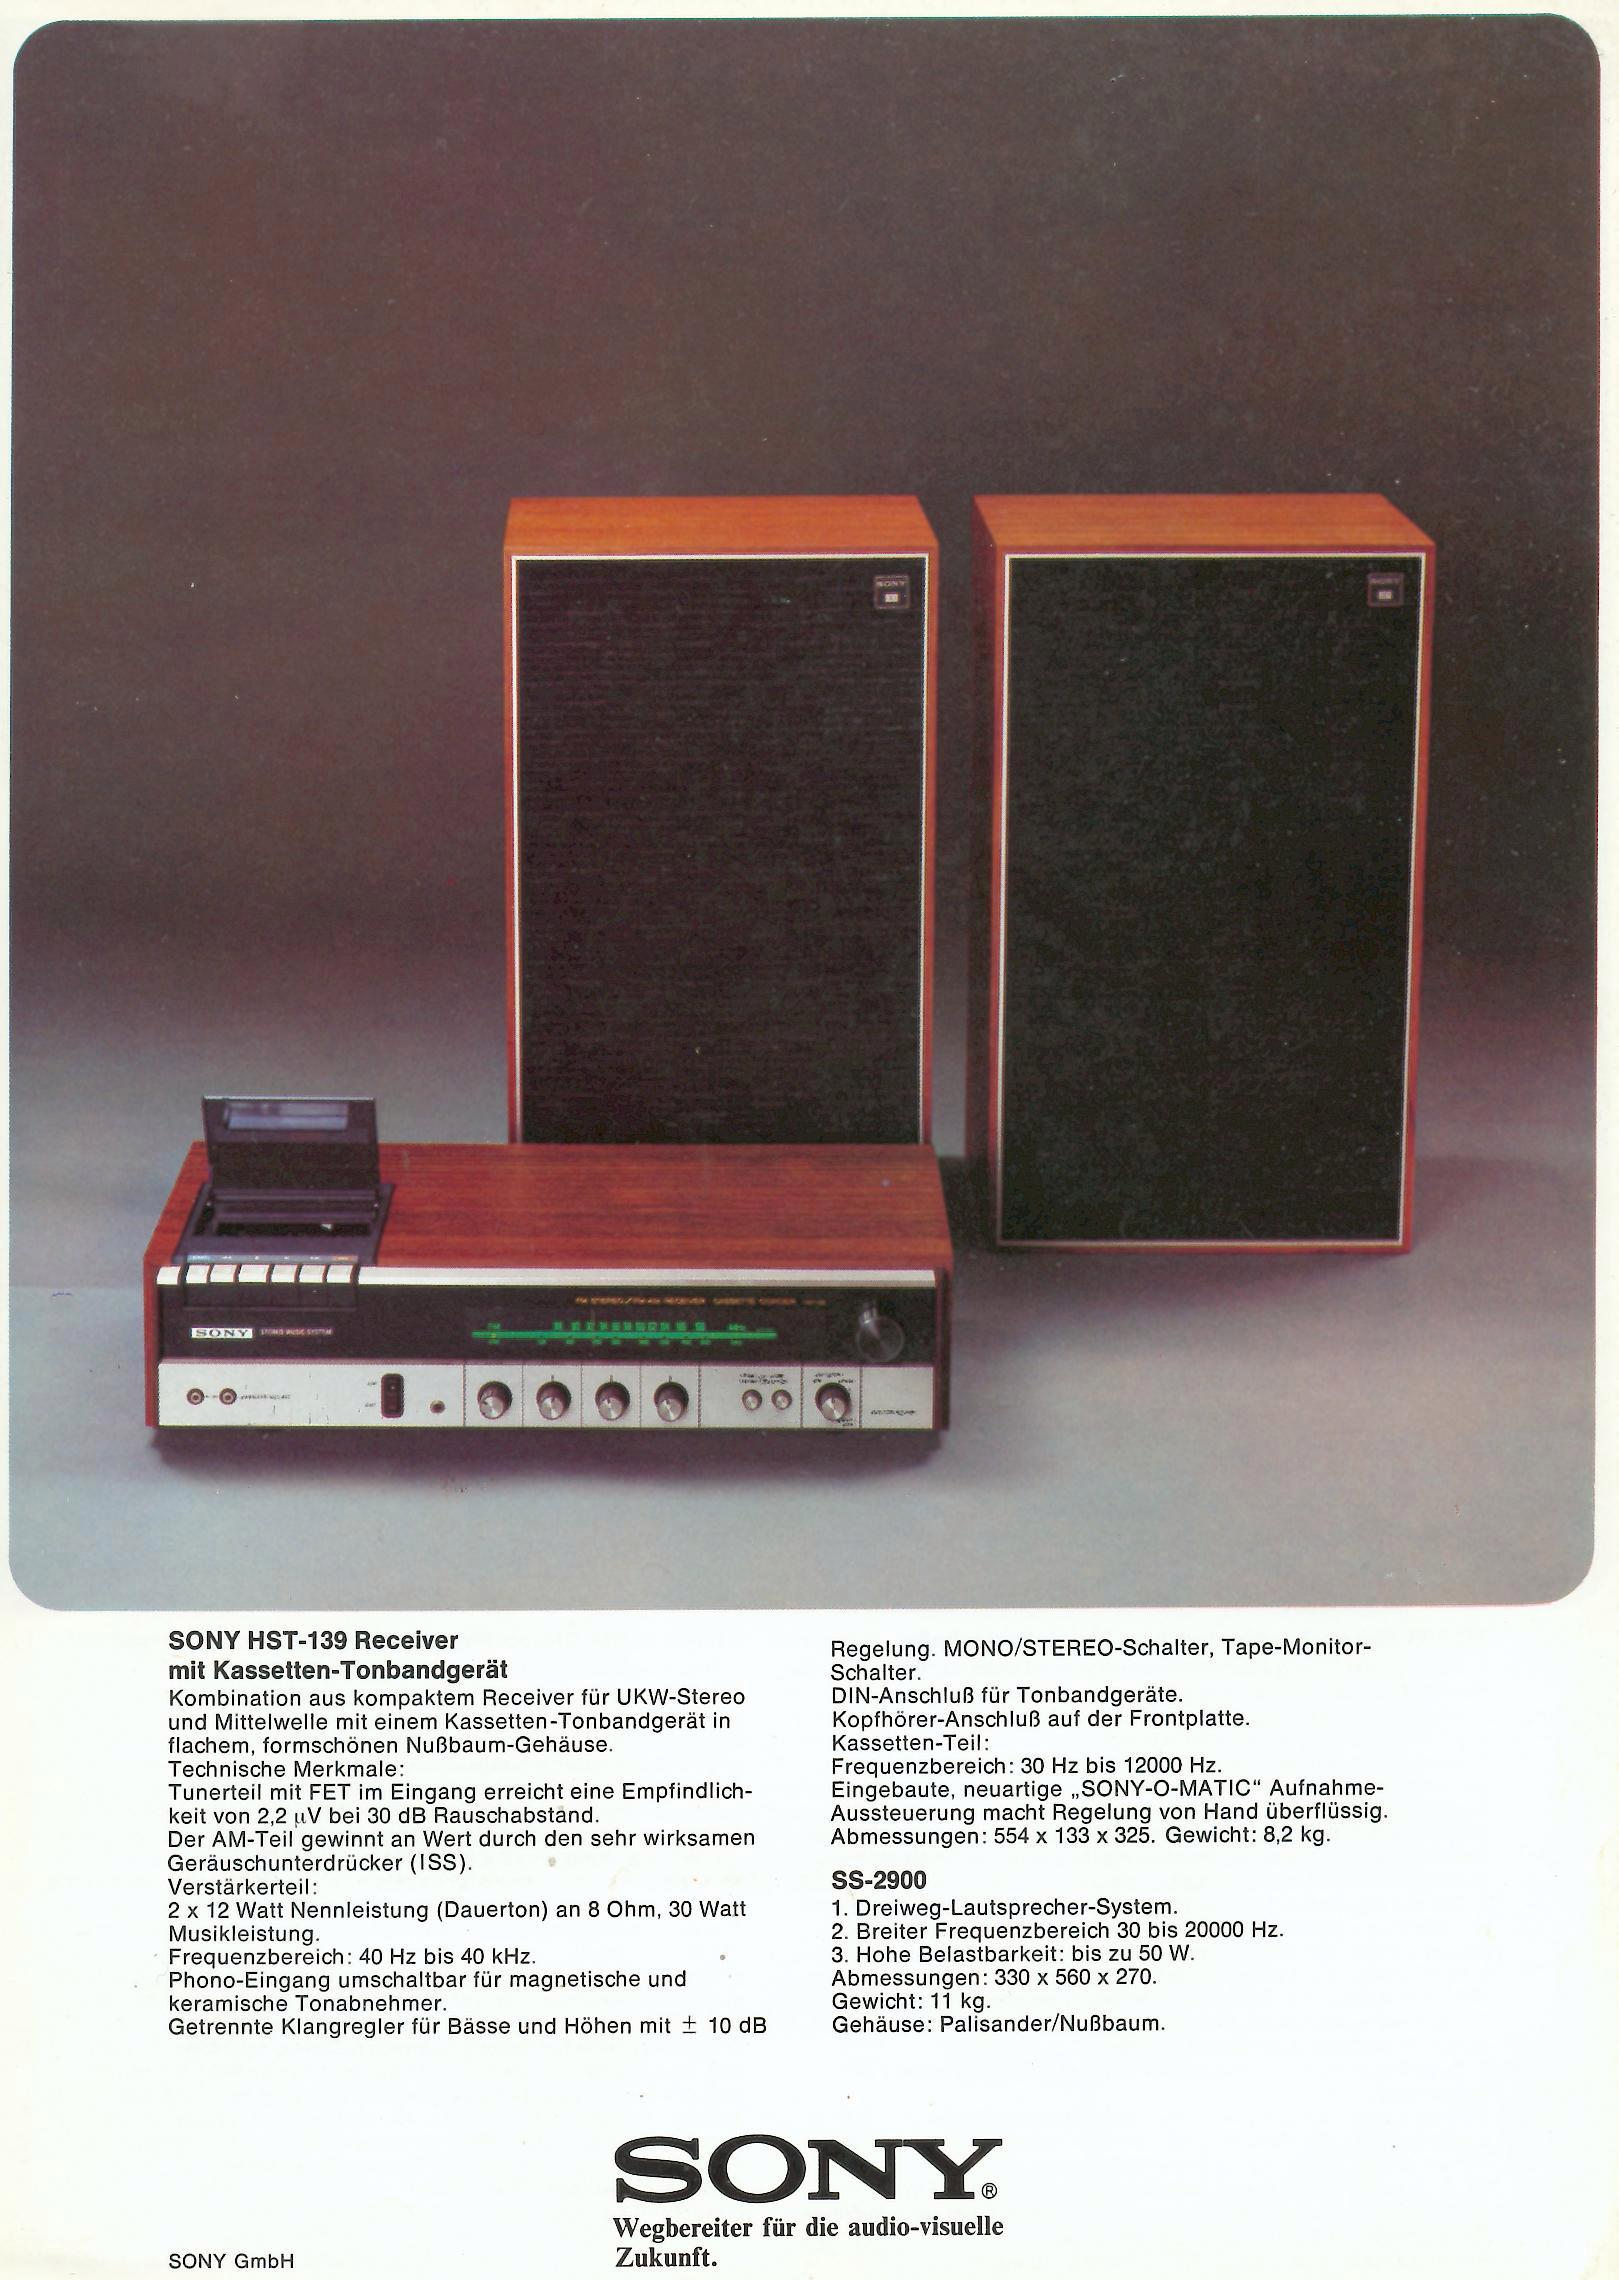 Sony HST-139-SS-2900-Prospekt-1973.jpg